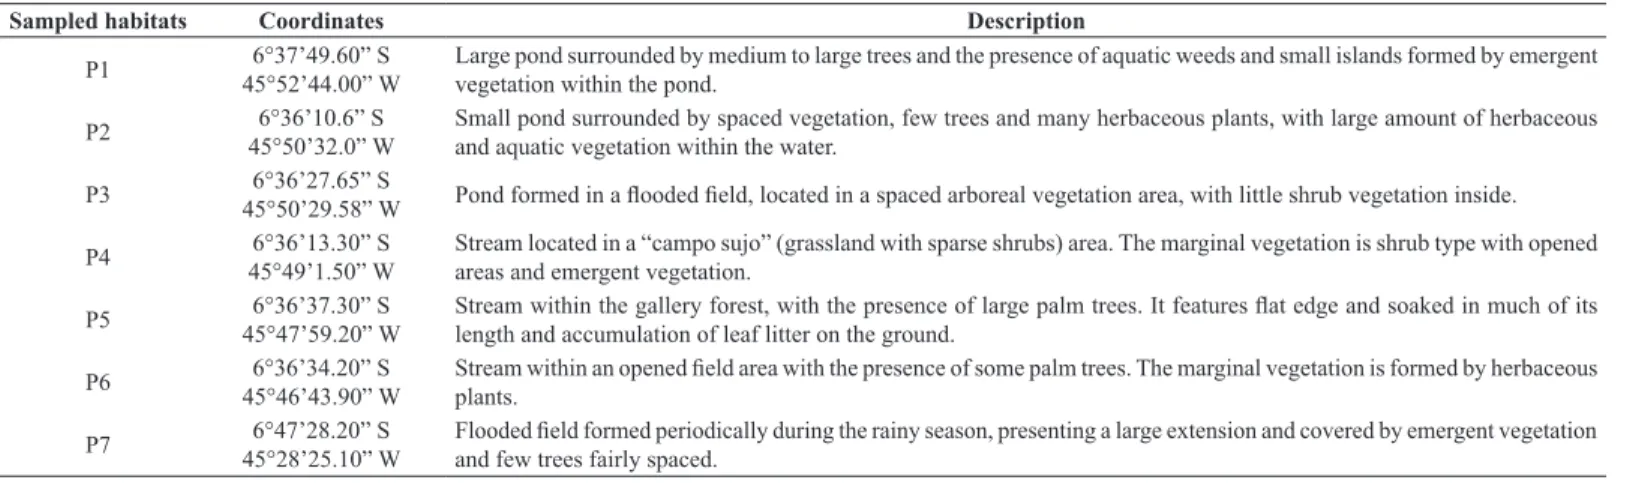 Table 1. Environmental description of the sampled habitats of the Parque Estadual do Mirador (PEM), south-central region of the state of Maranhão, Northeastern Brazil.